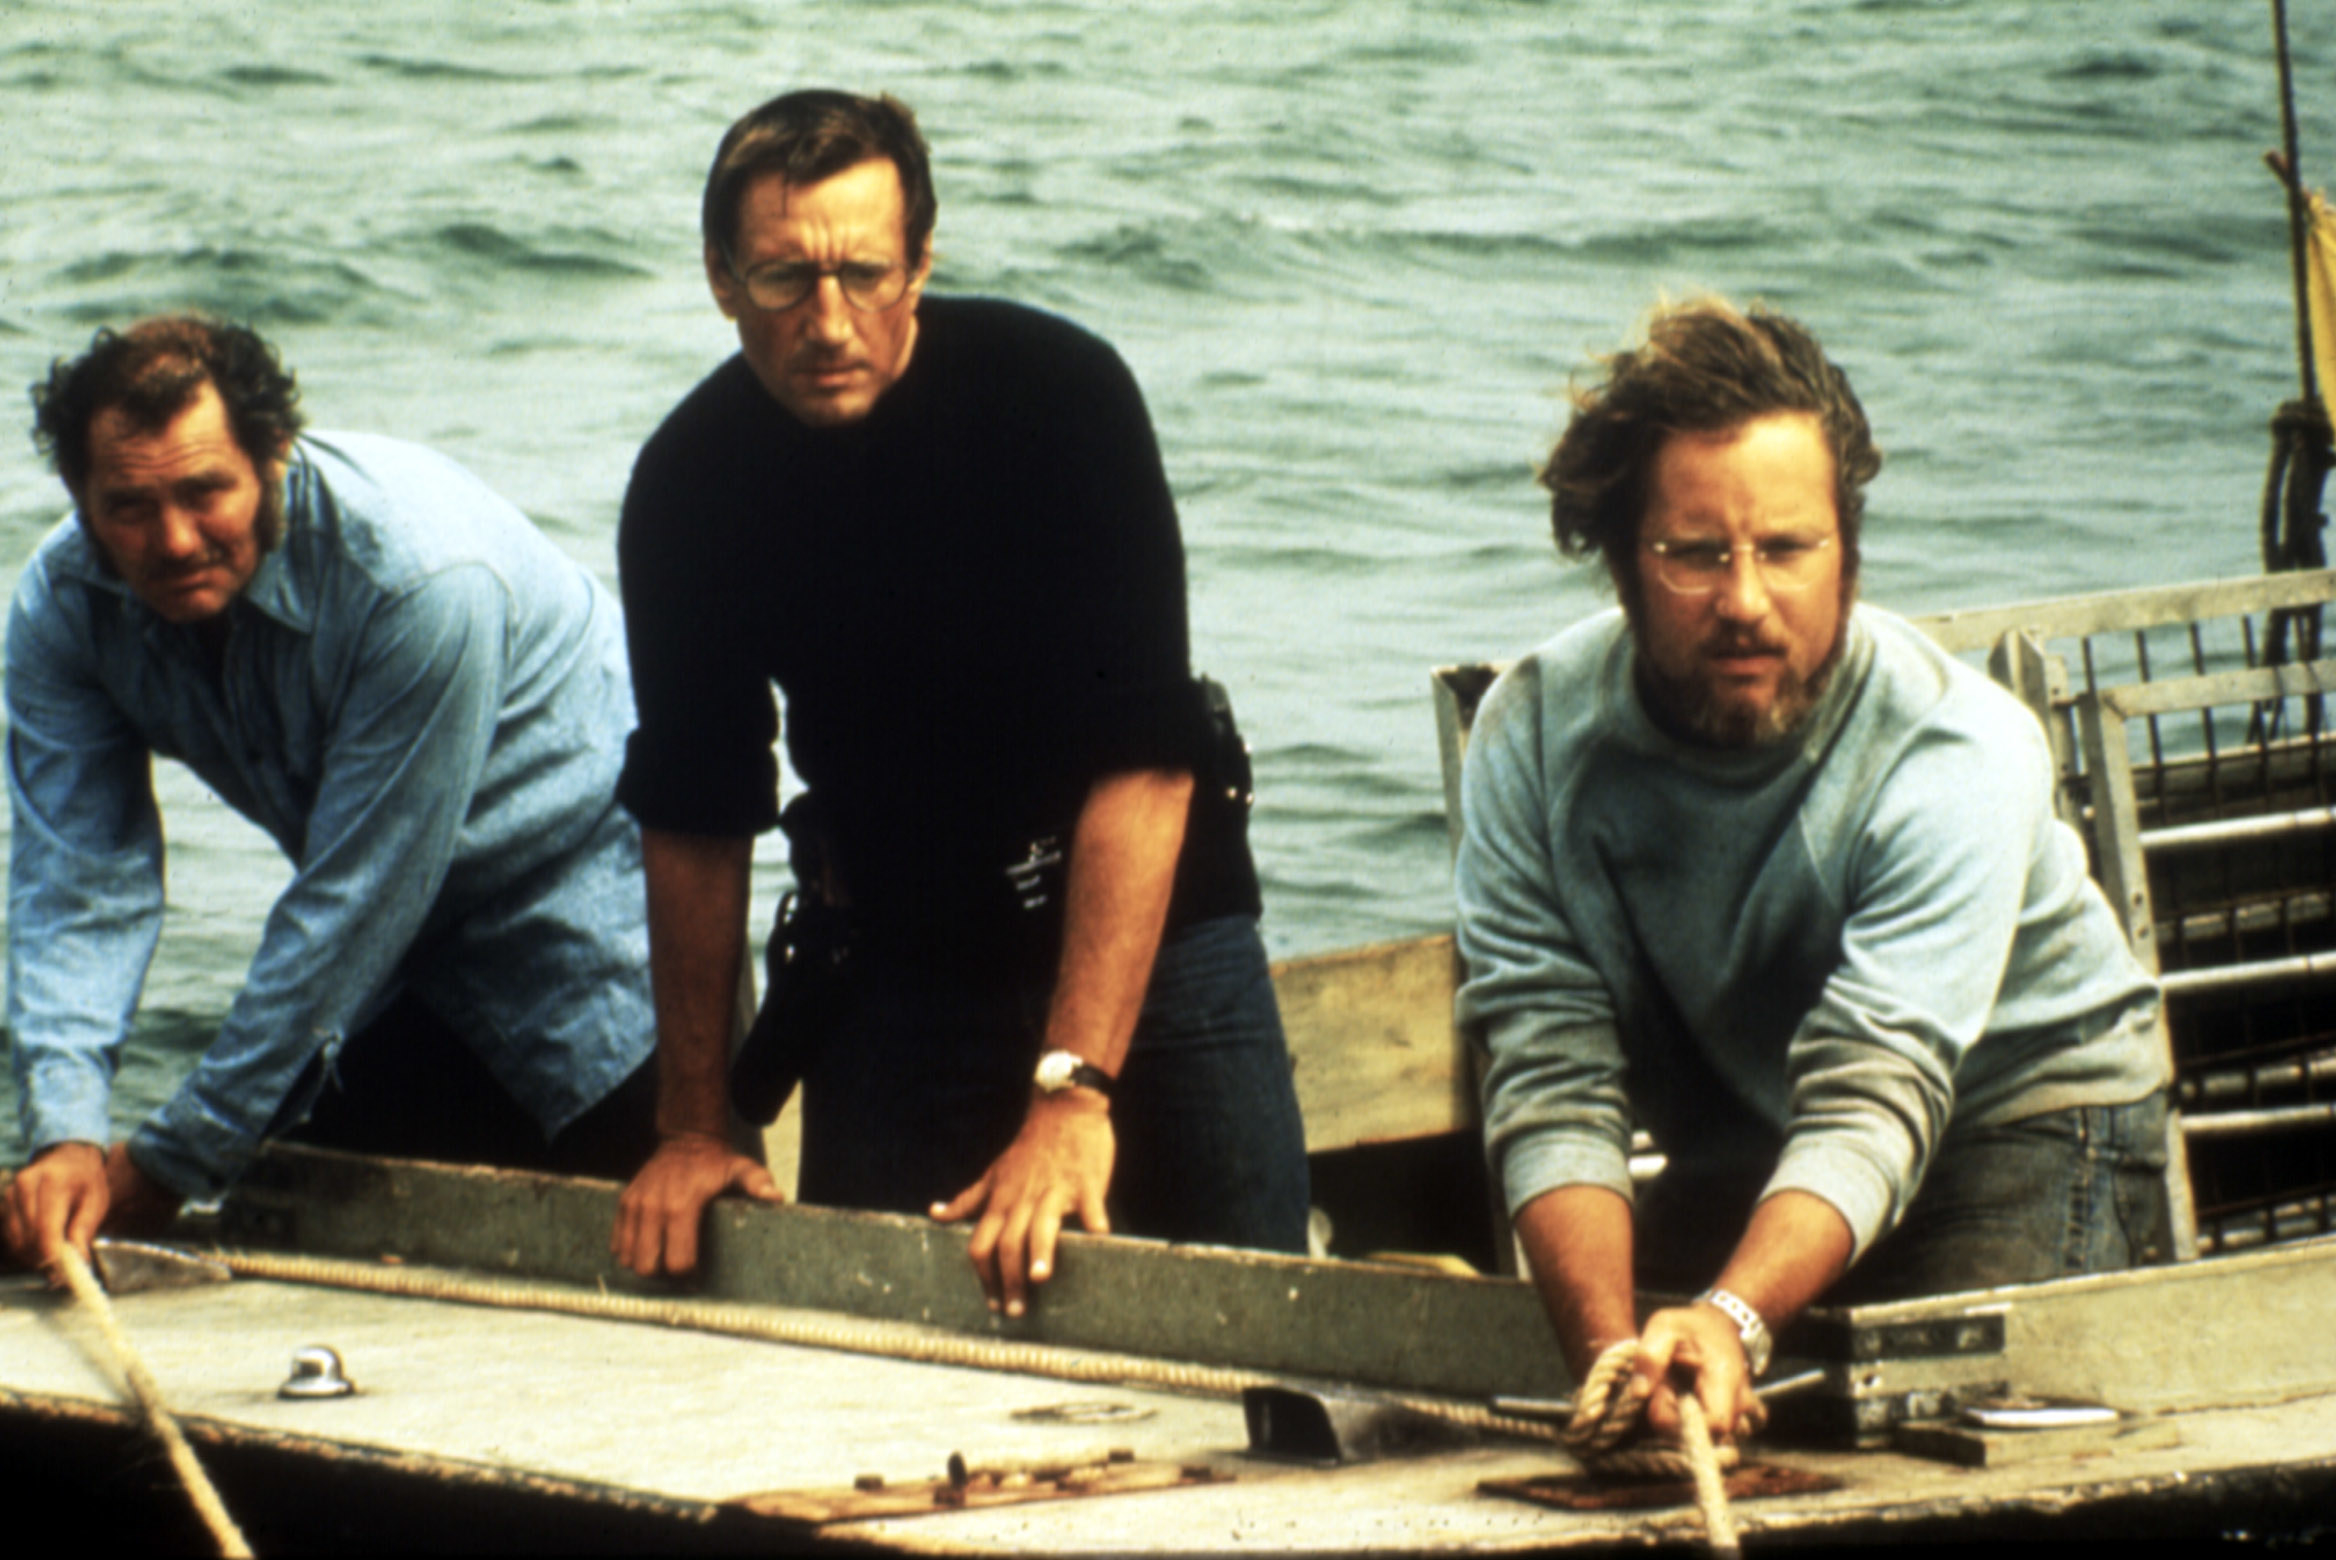 Three men looking disturbed on a boat